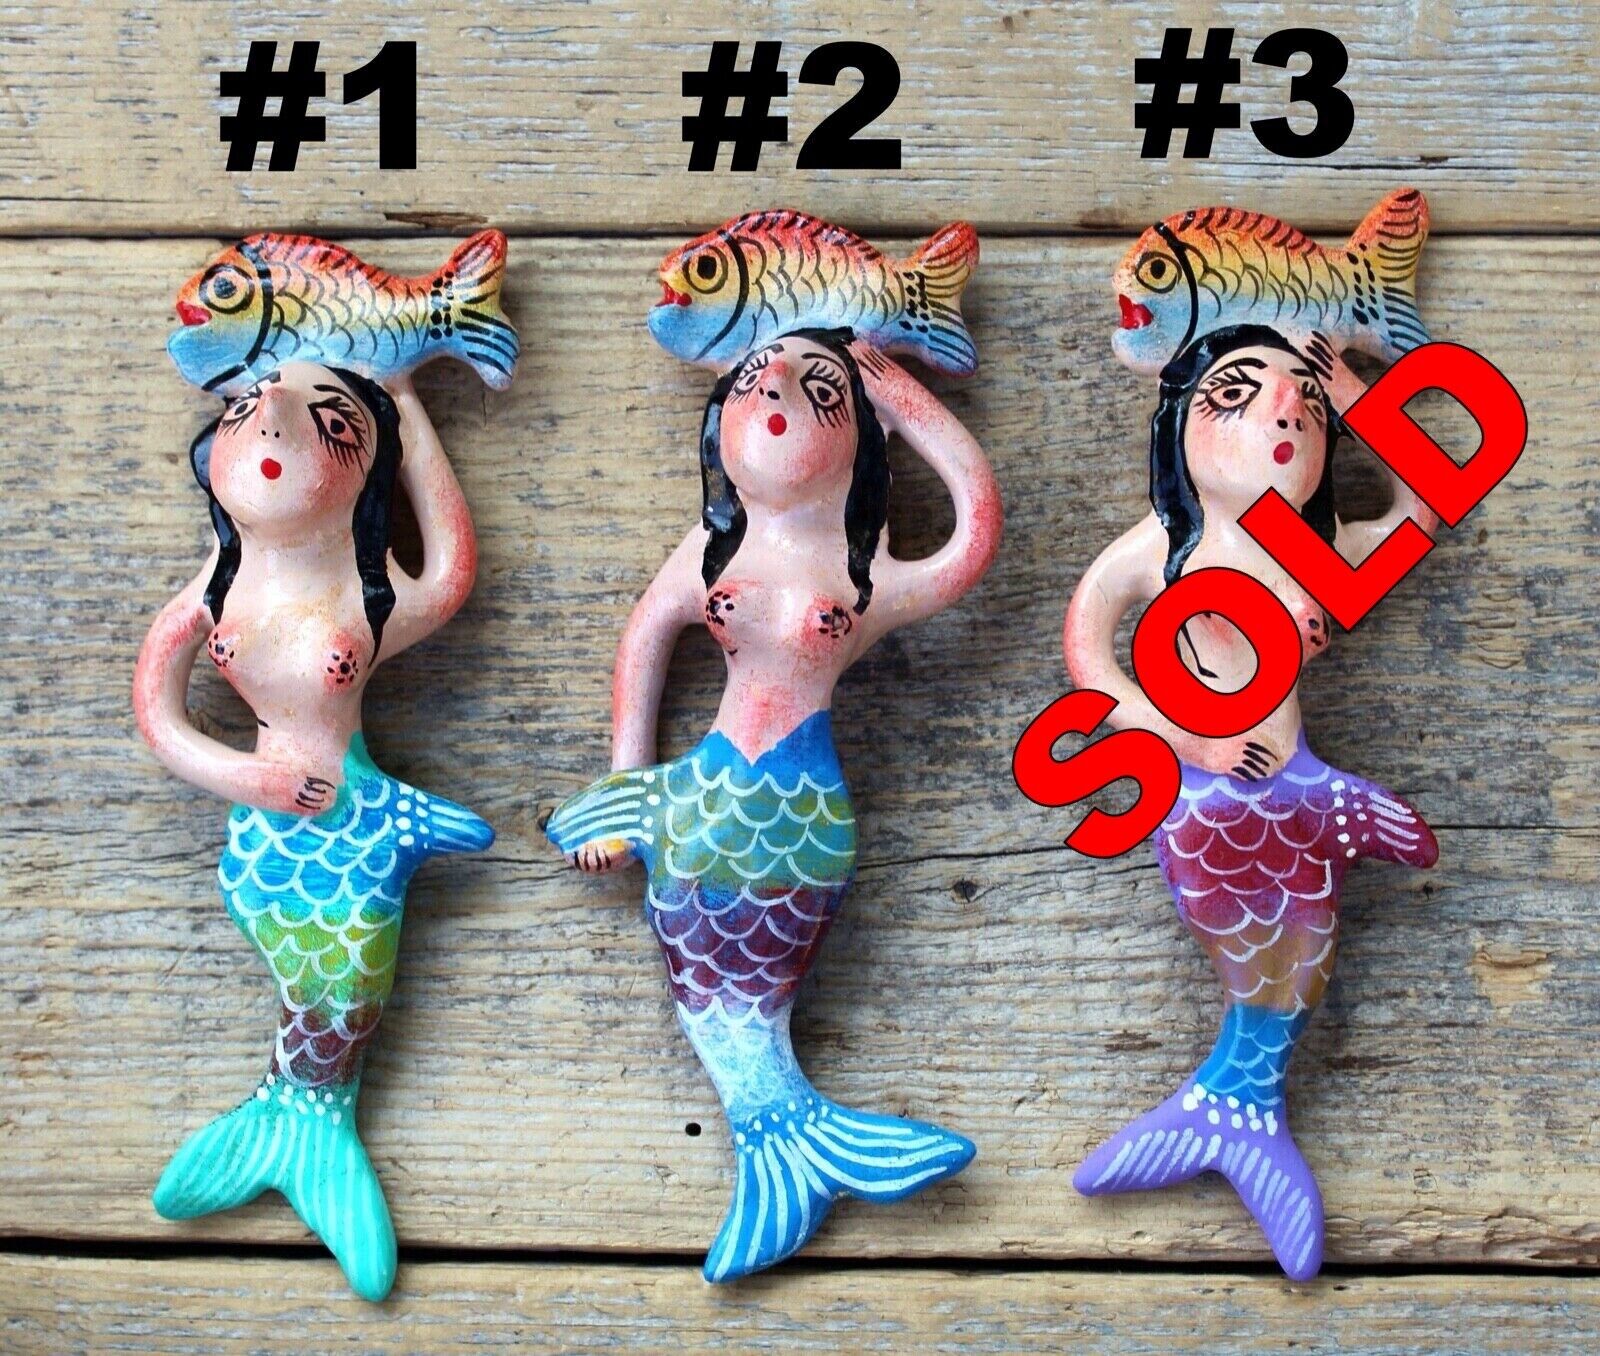 Mermaid Fish on Head SOLD SEPARATELY Clay Ornaments Handmade Mexican Folk Art